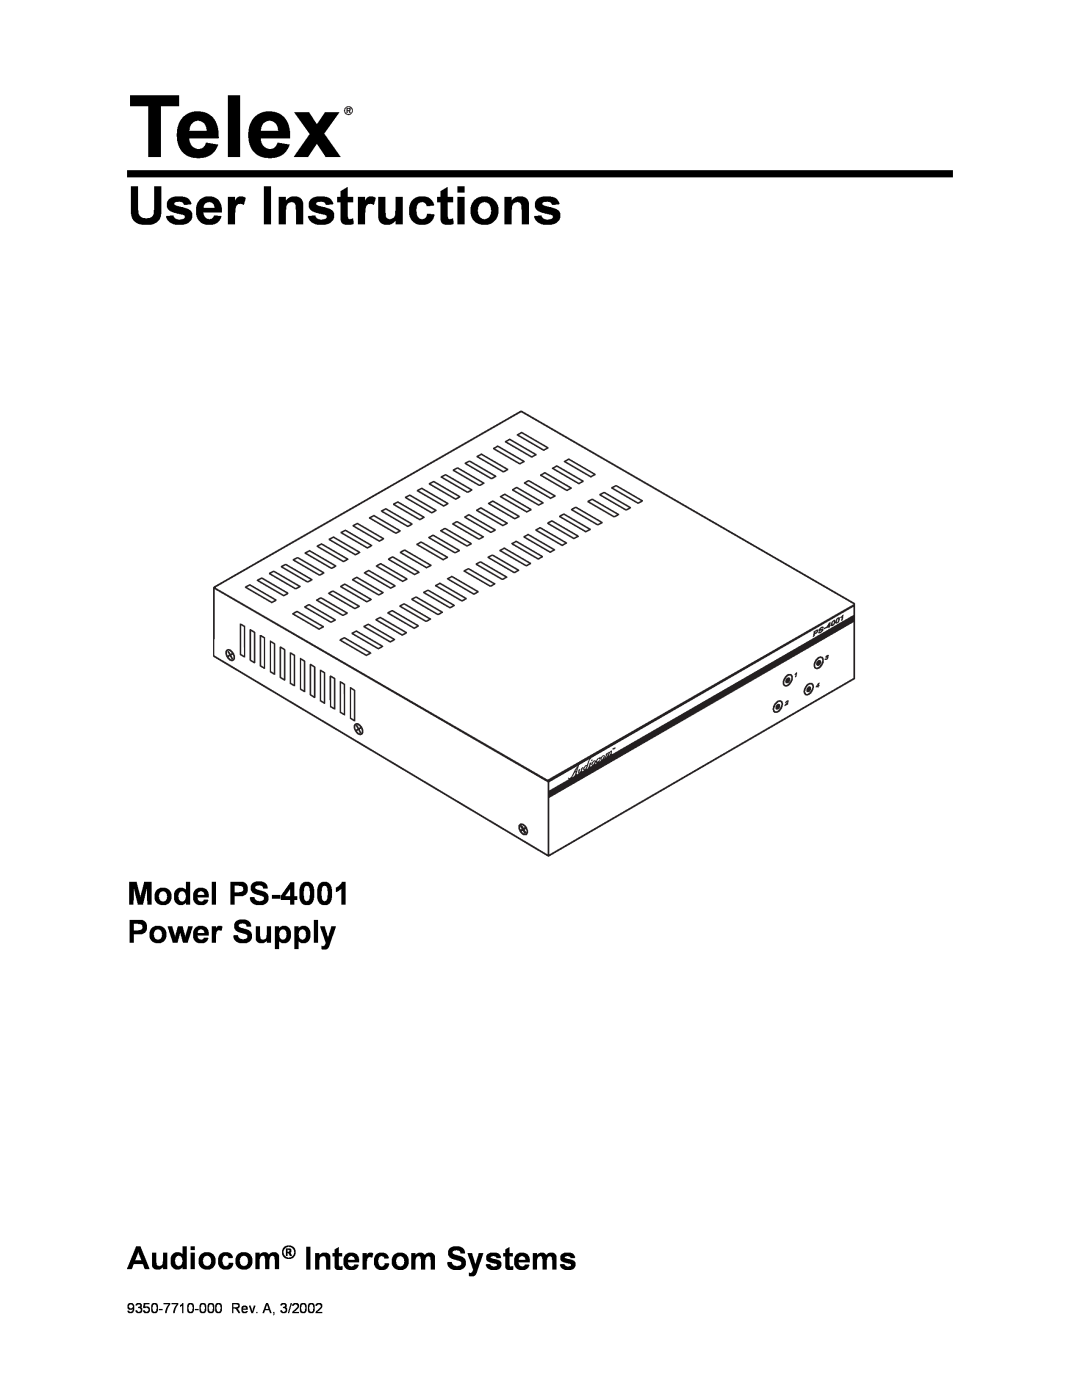 Telex manual Model PS-4001 Power Supply Audiocom Intercom Systems, User Instructions 